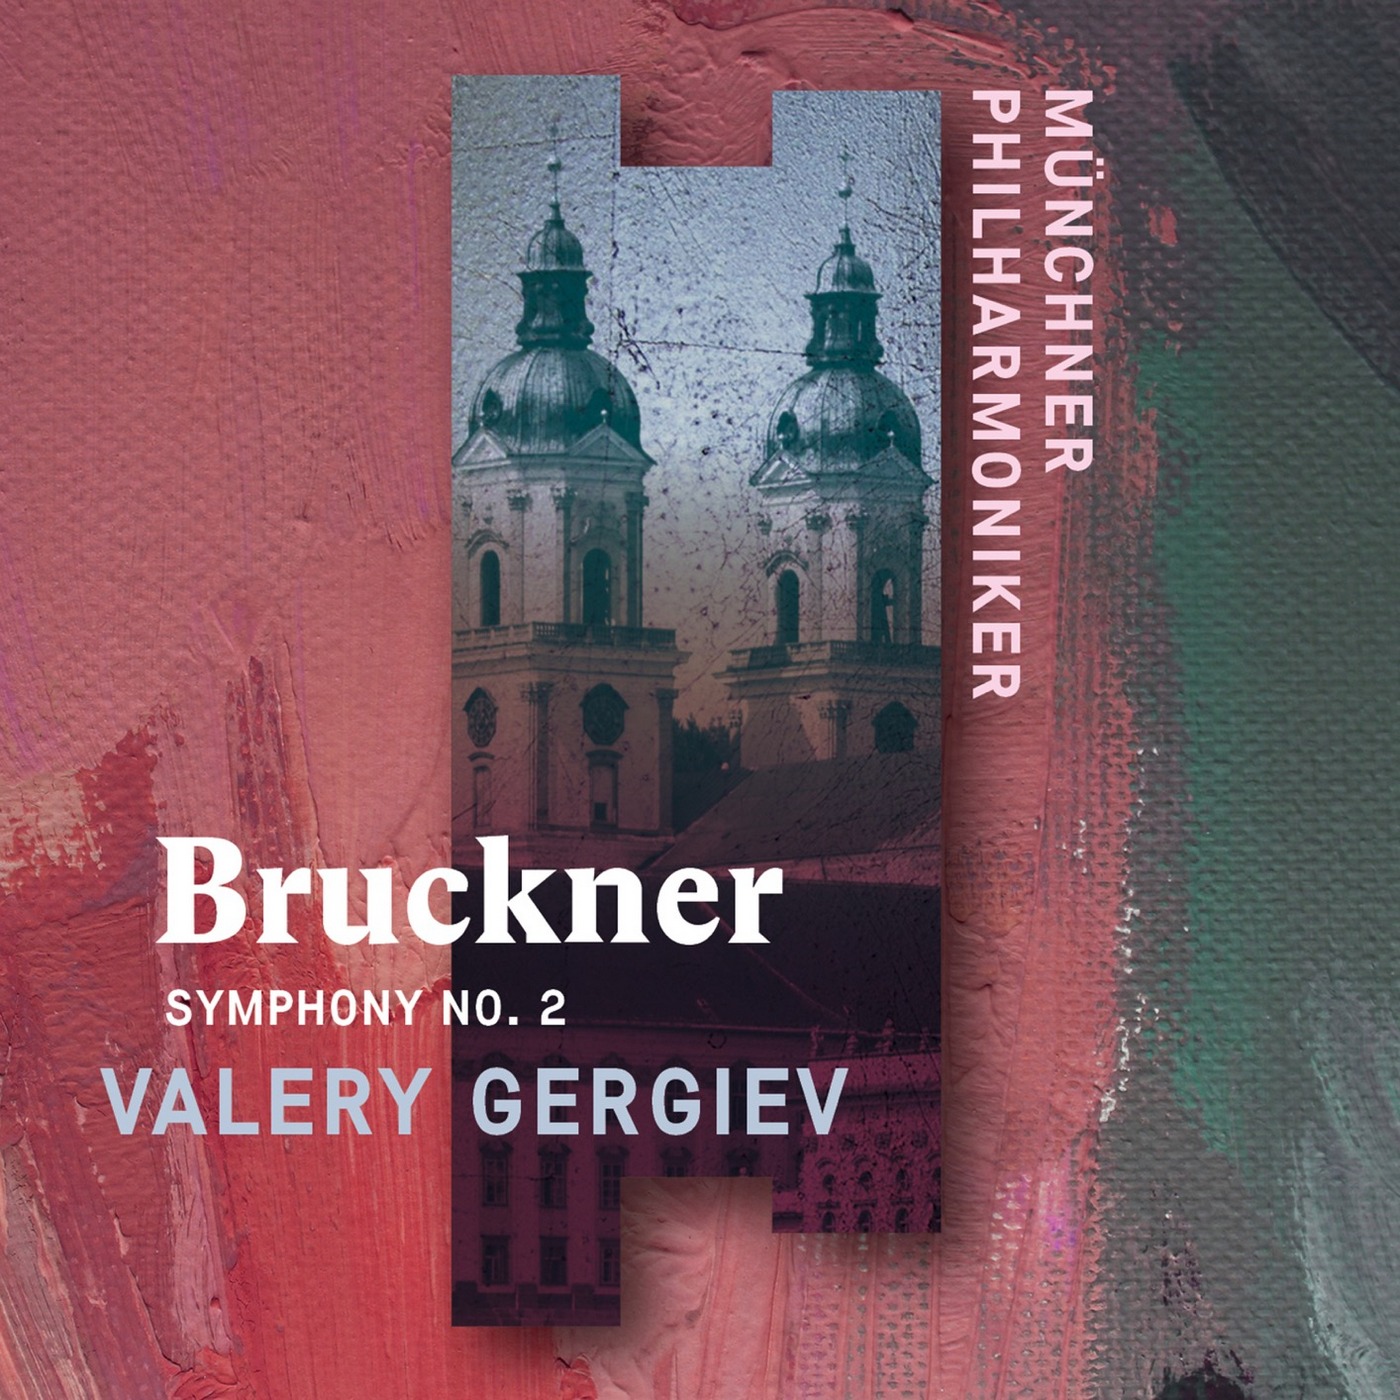 Munchner Philharmoniker & Valery Gergiev – Bruckner: Symphony No. 2 (Live) (2019) [FLAC 24bit/96kHz]